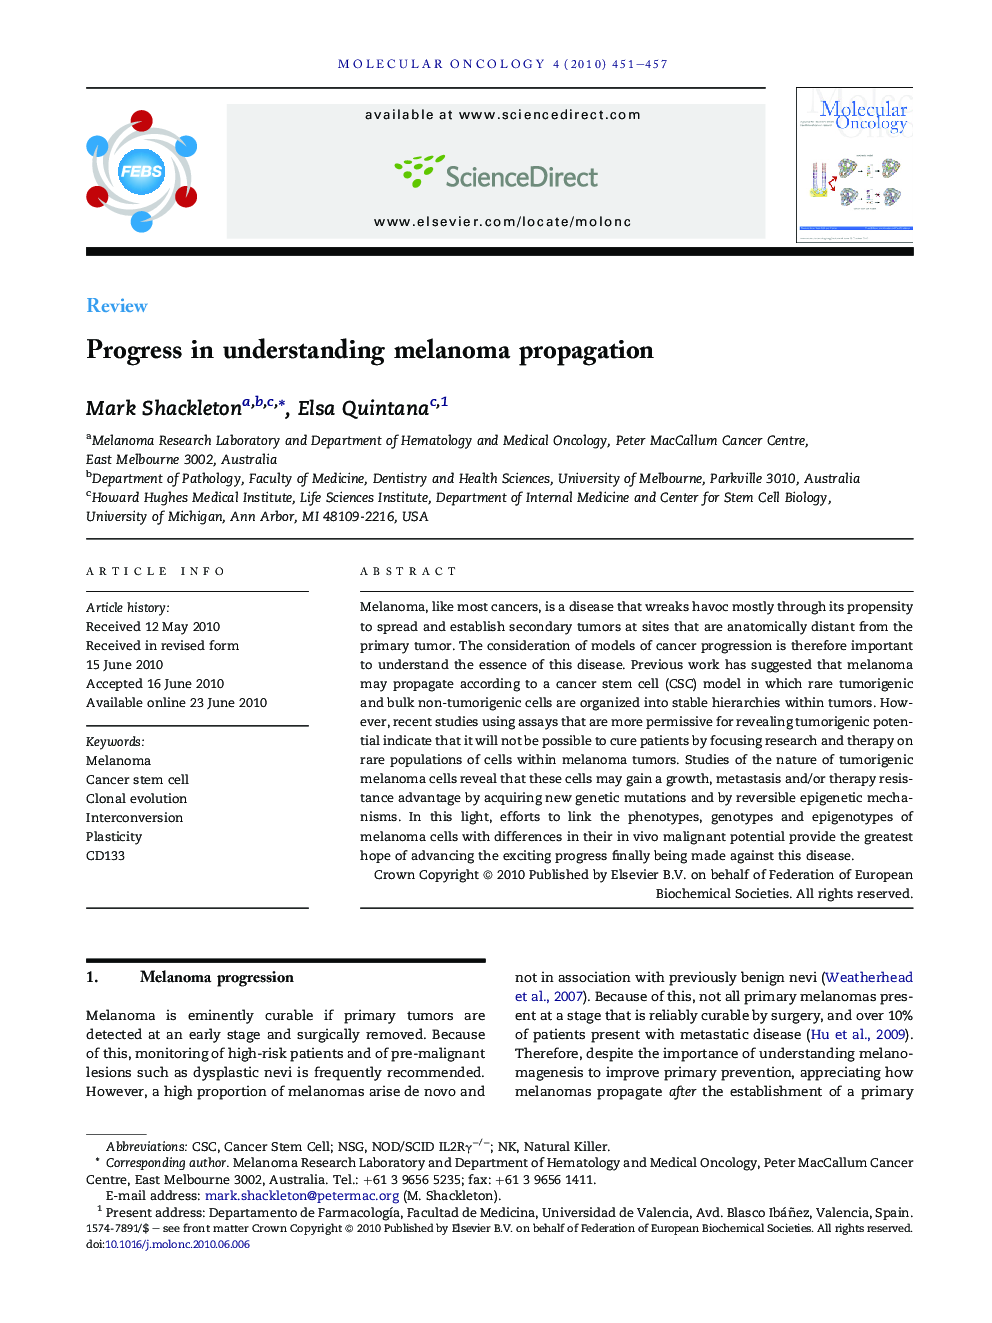 Progress in understanding melanoma propagation